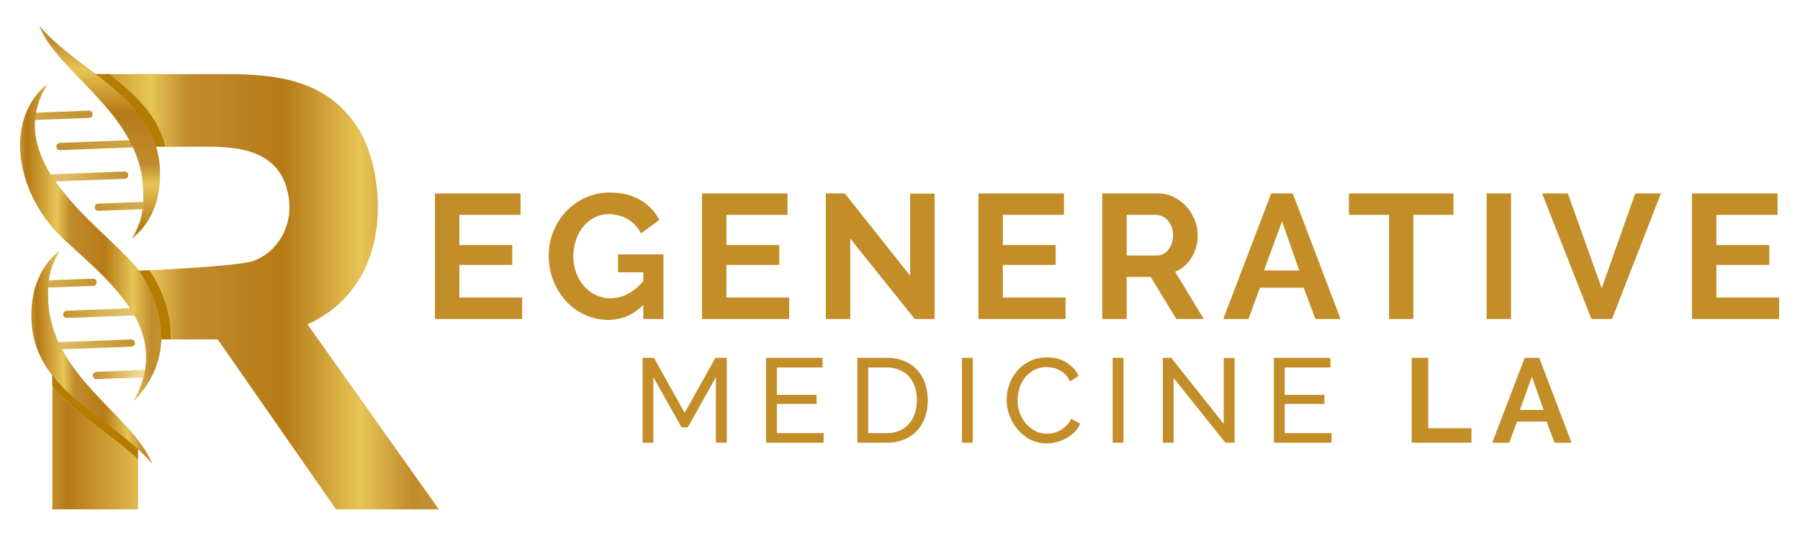 regenerative medicine la logo